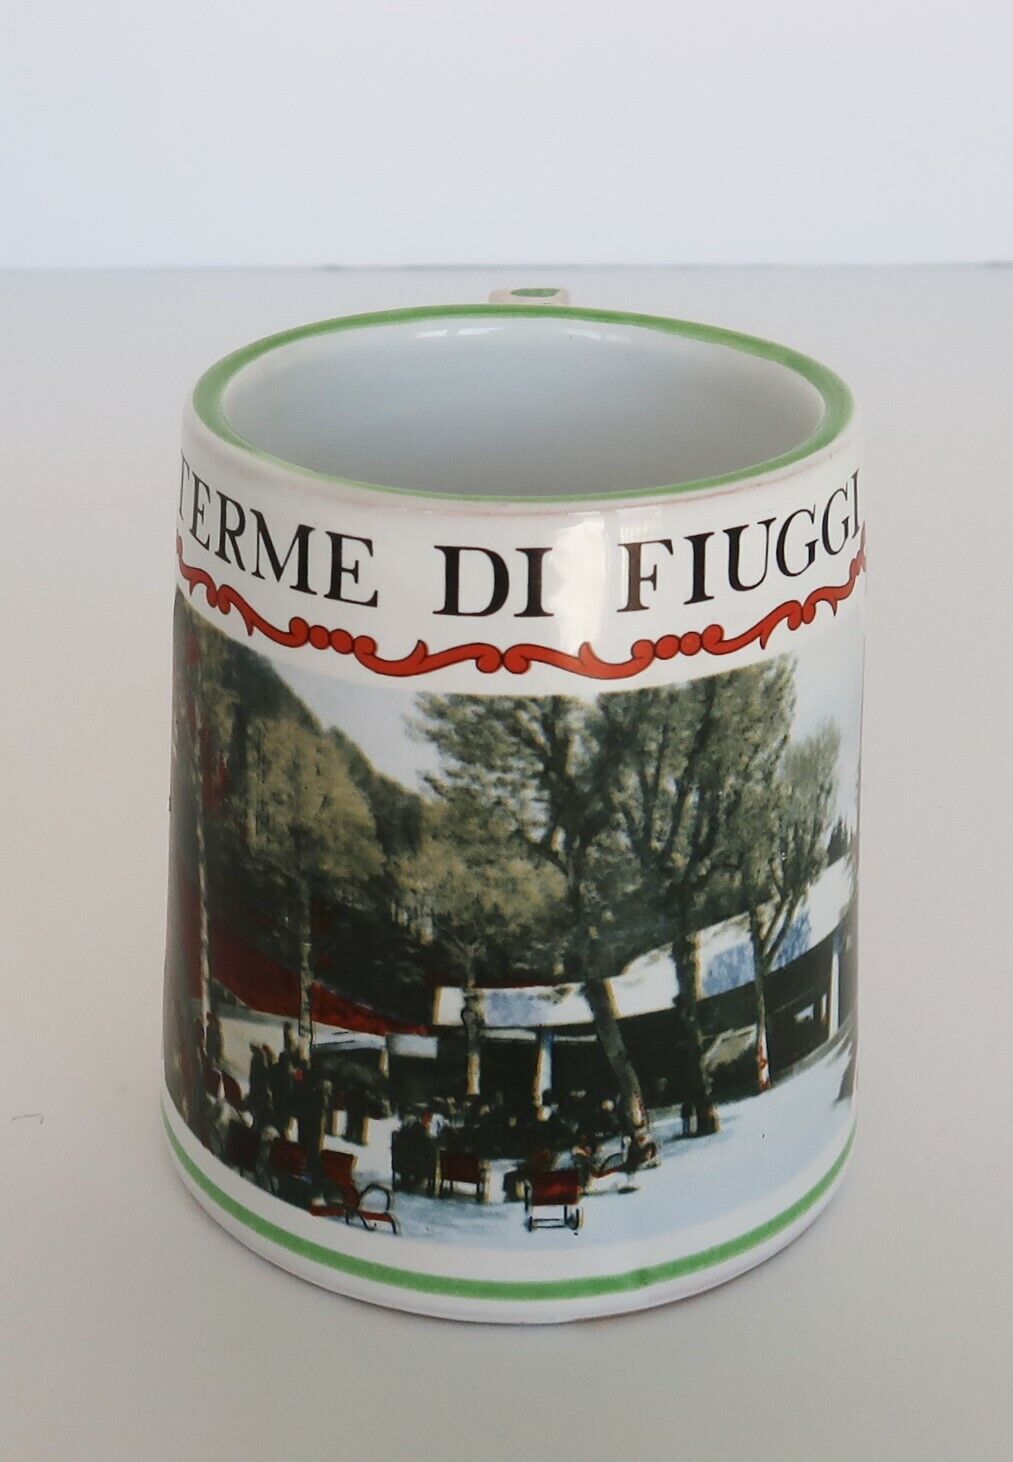 Vintage Nicolini Deruta Terme Di Fiuggi thermal baths handmade coffee mug